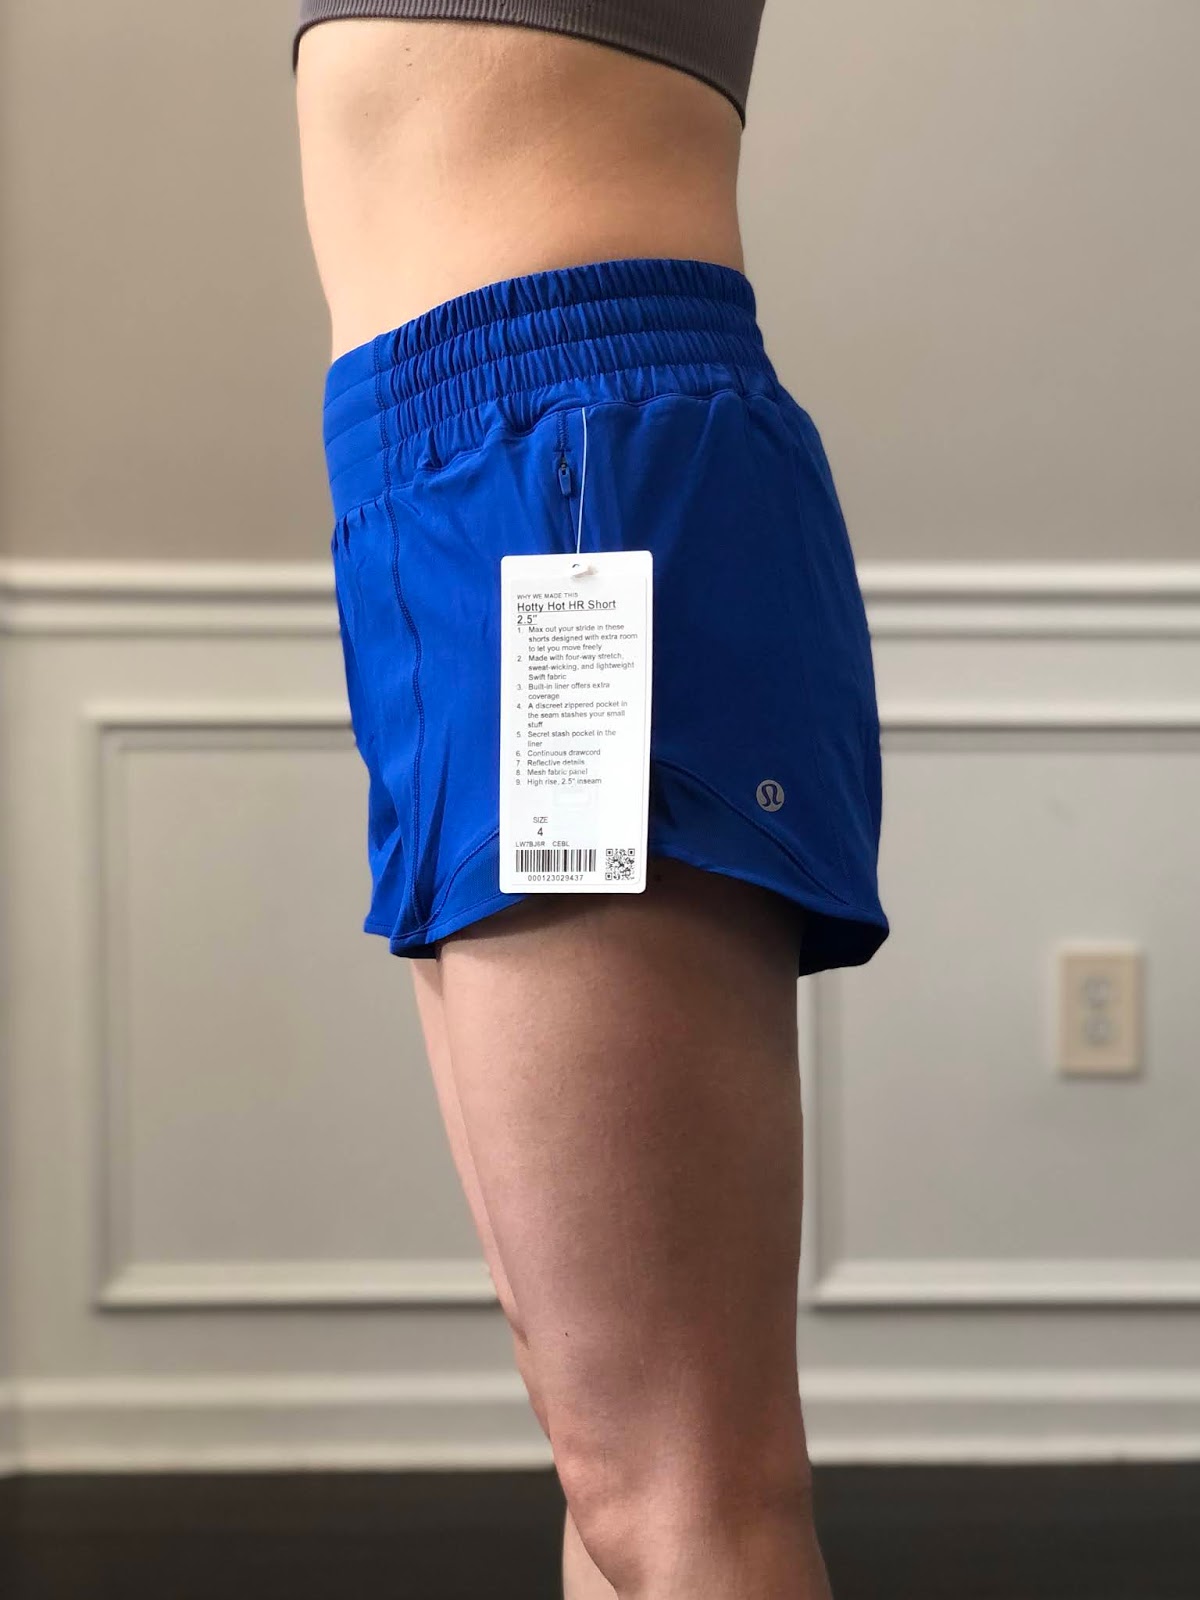 hotty hot shorts lululemon review